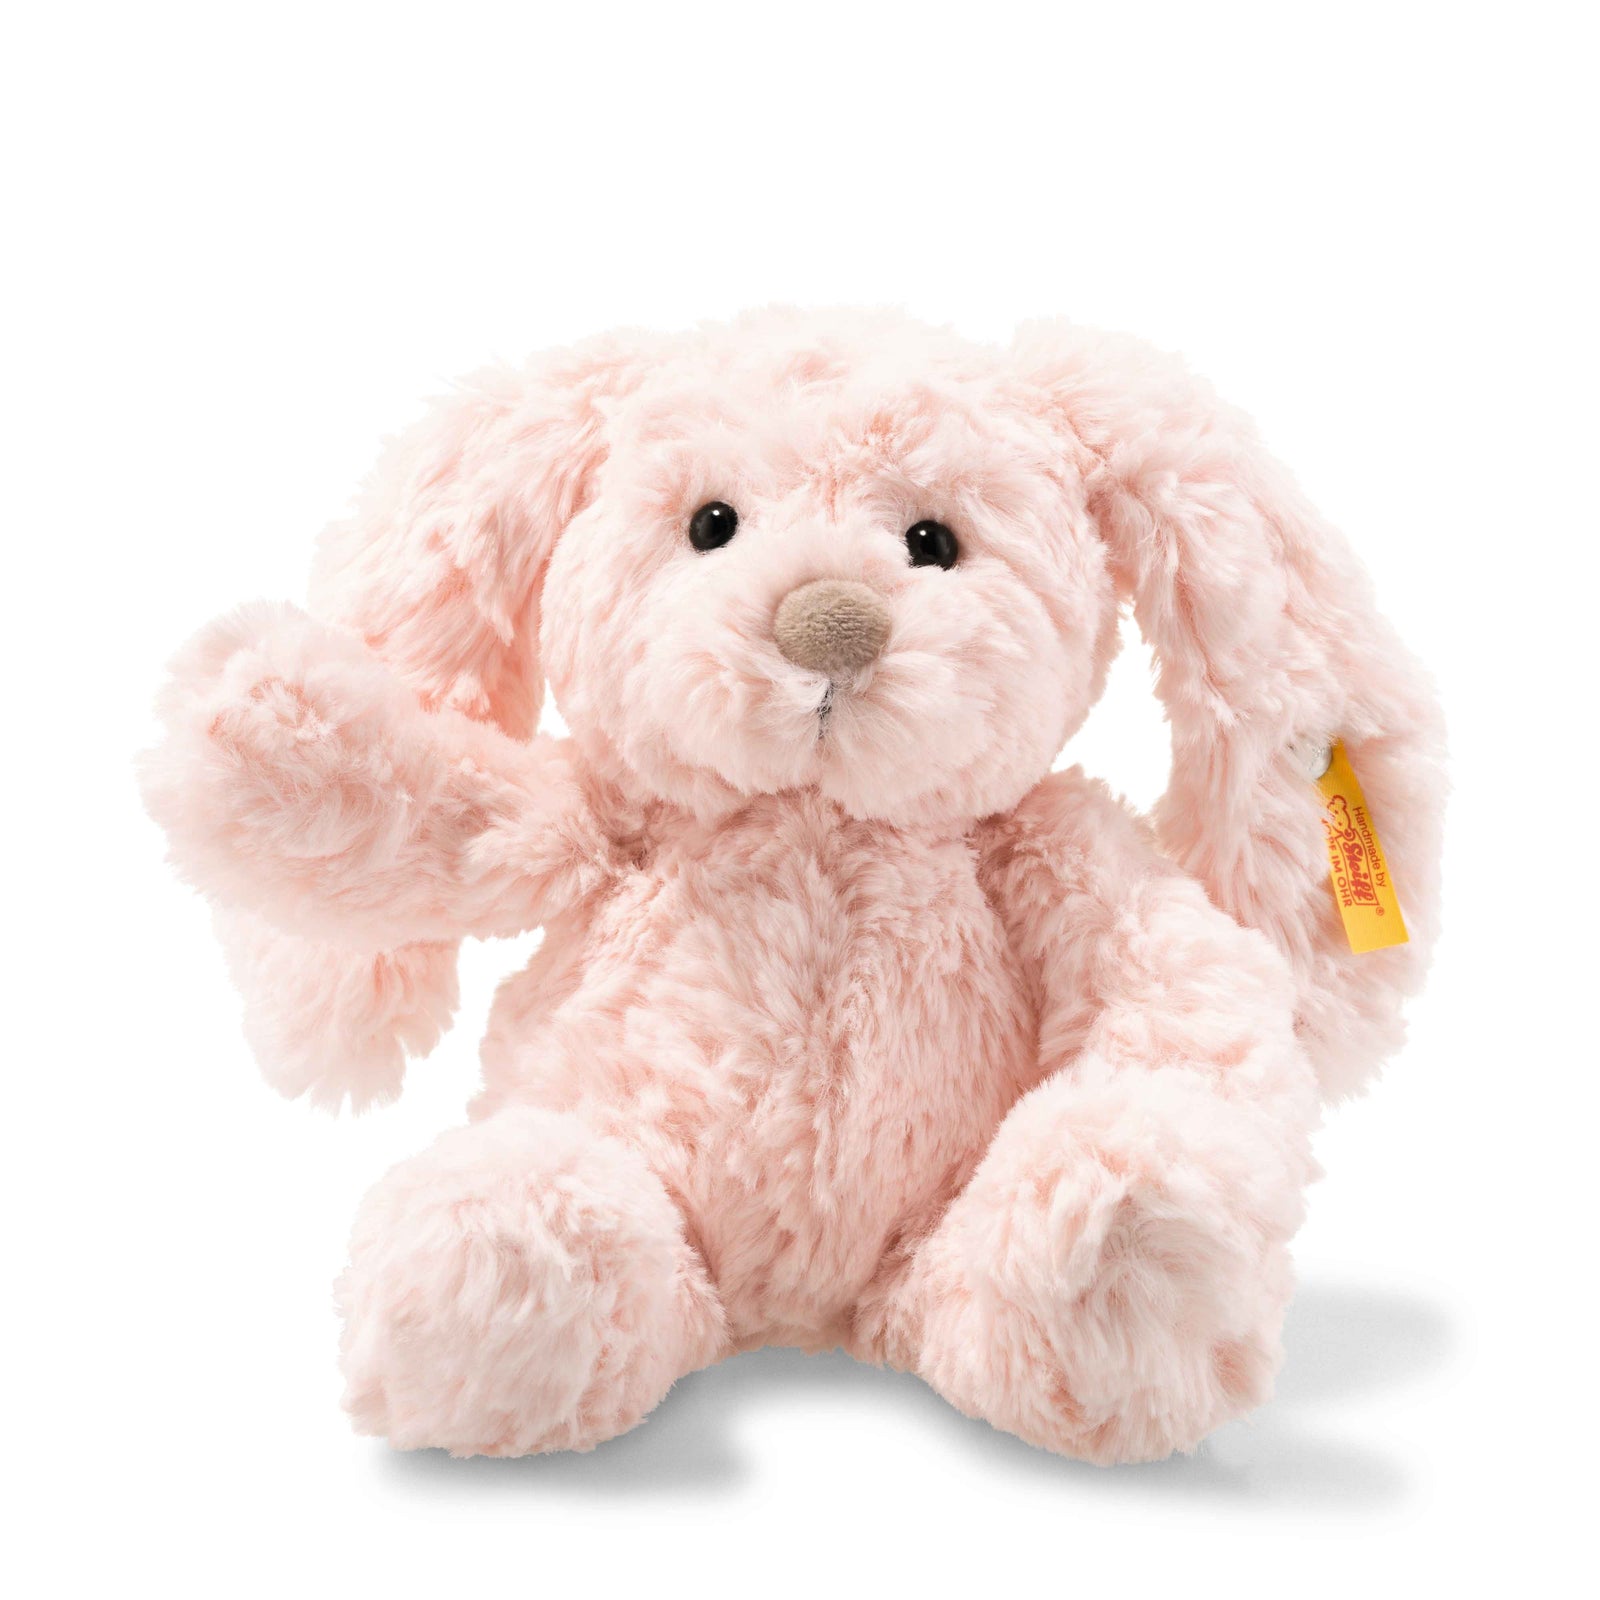 Steiff Soft & Cuddly Tilda Rabbit - EAN 080616